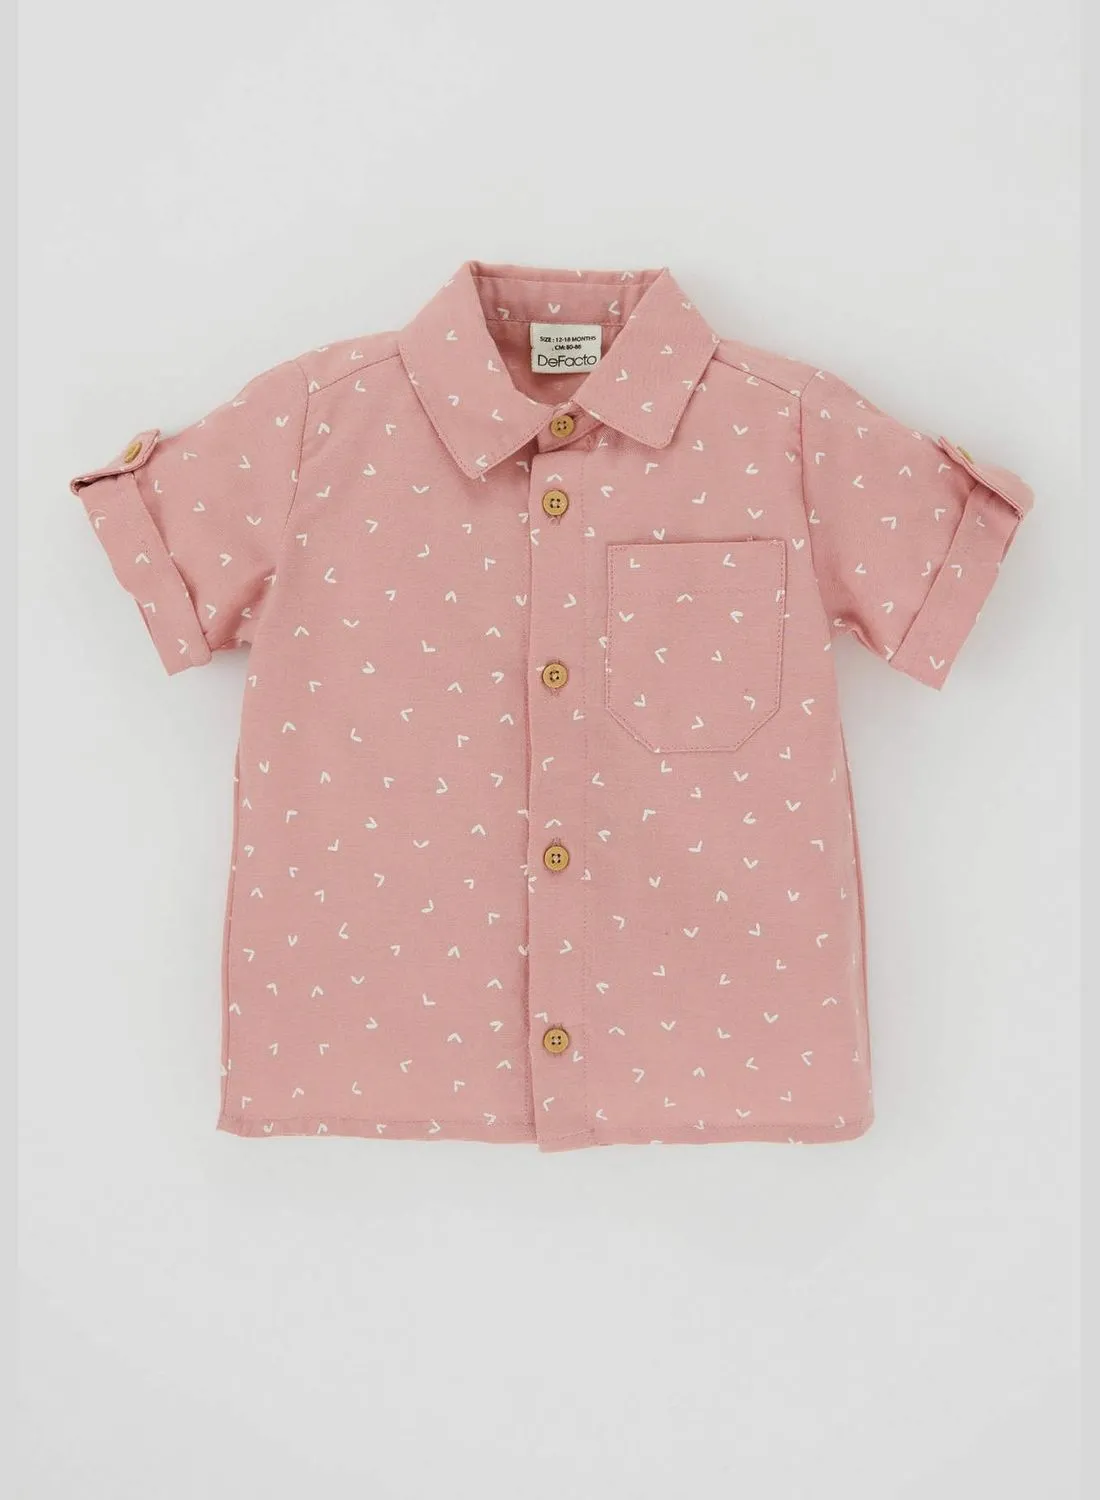 DeFacto BabyBoy Woven Top Short Sleeve Shirt